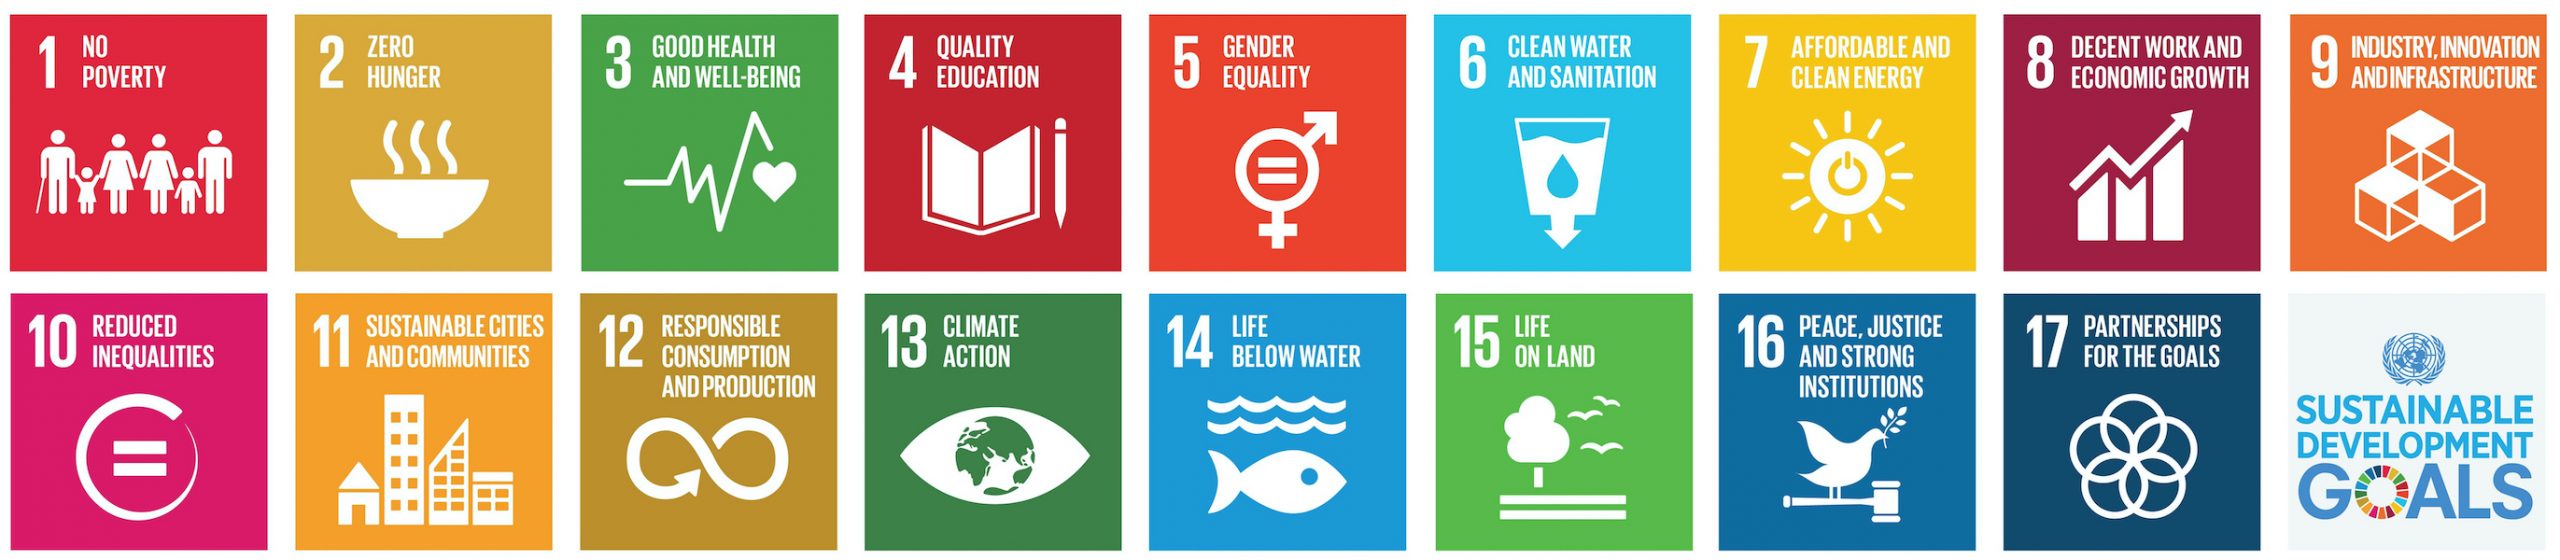 United Nations Sustainable Development goals